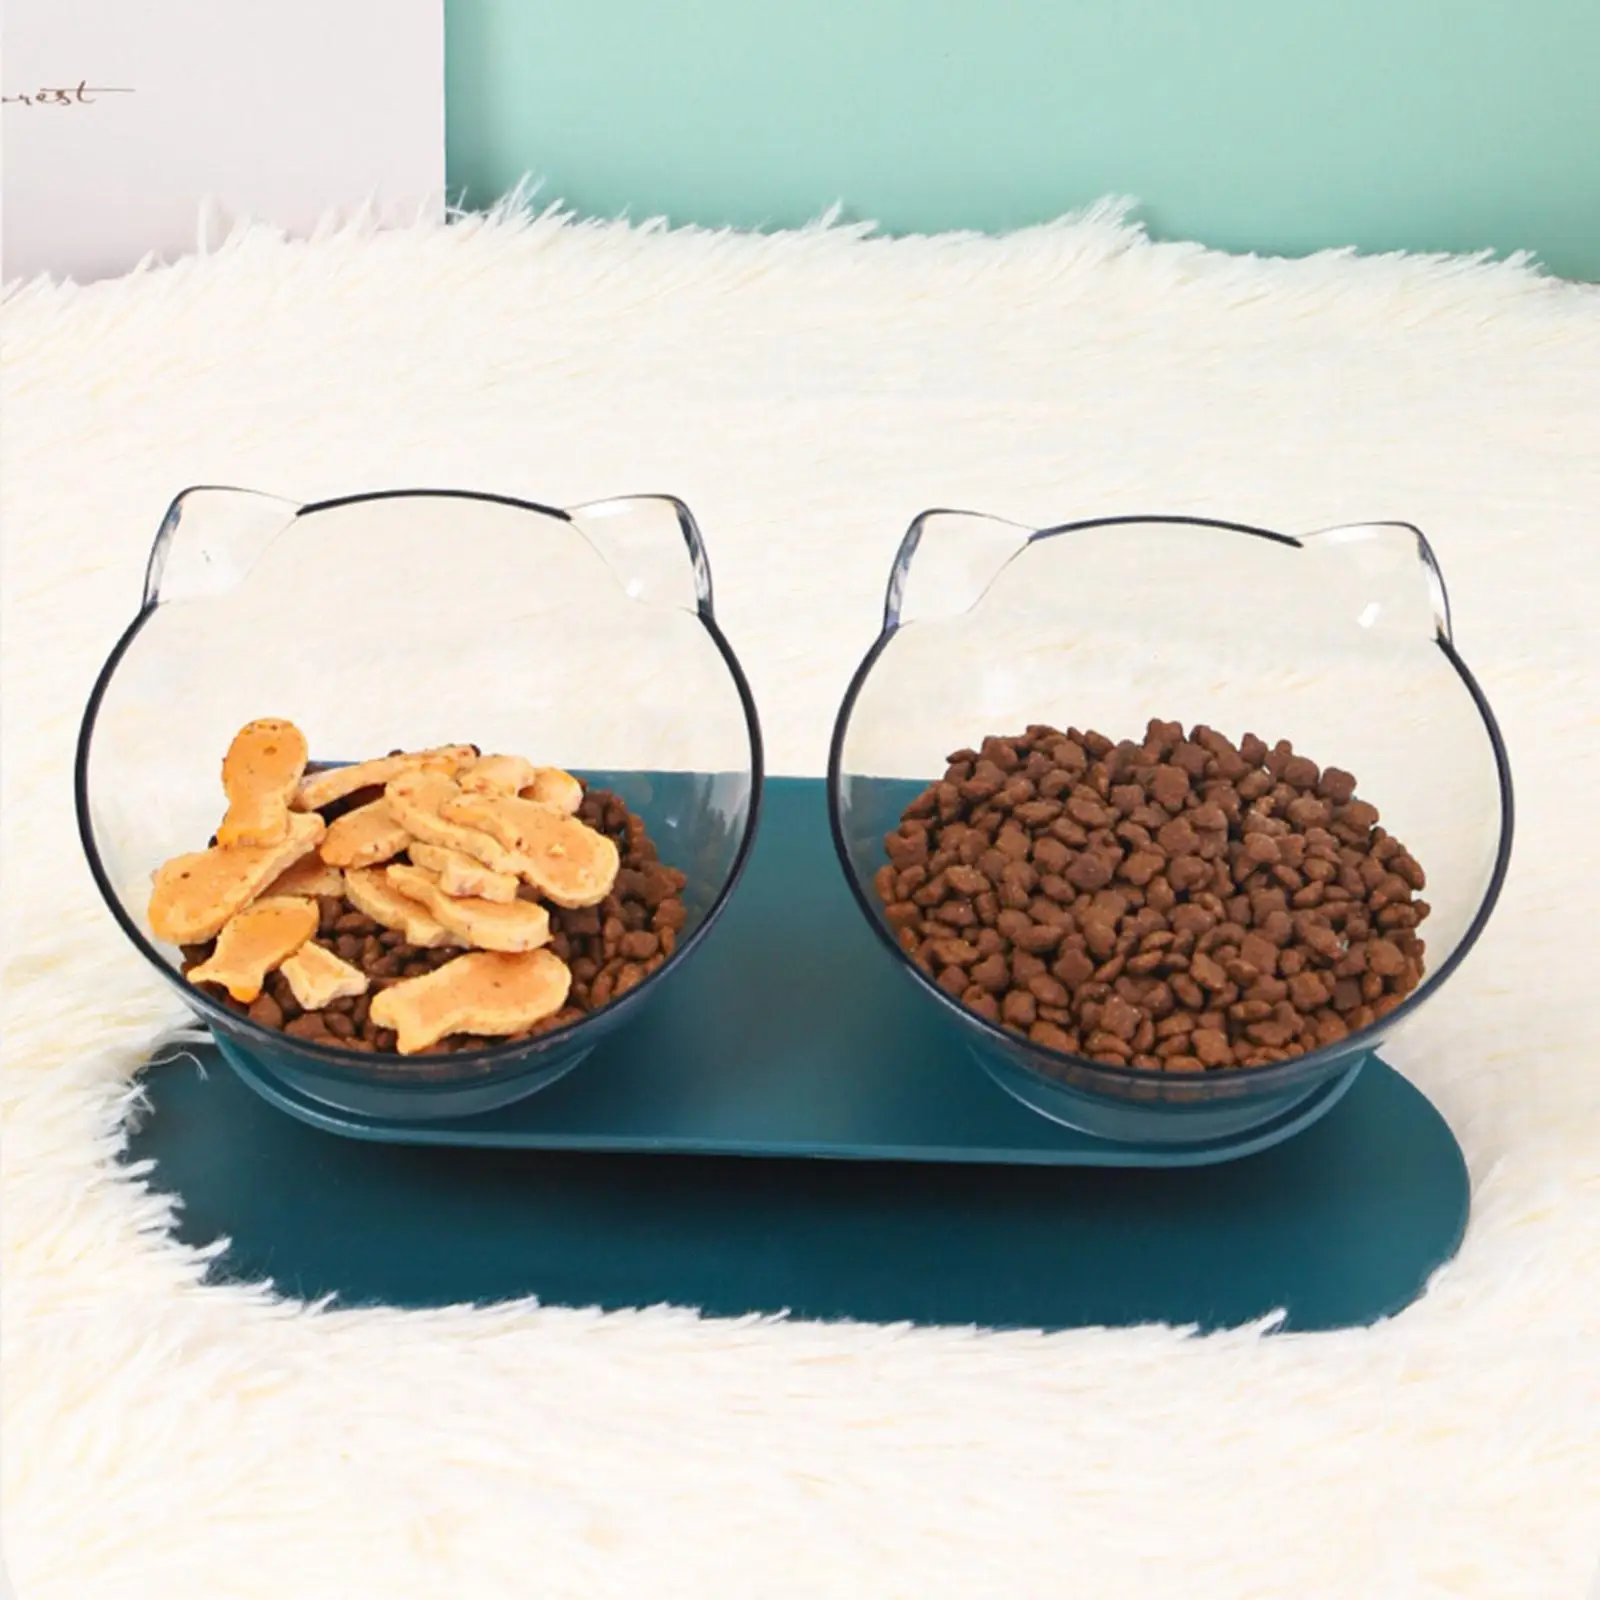 Slanted Cat Bowls Pet Feeder Double Pet Bowls Raised Stand Easily Clean Feeding Station Oblique Rim Premium Material Durable